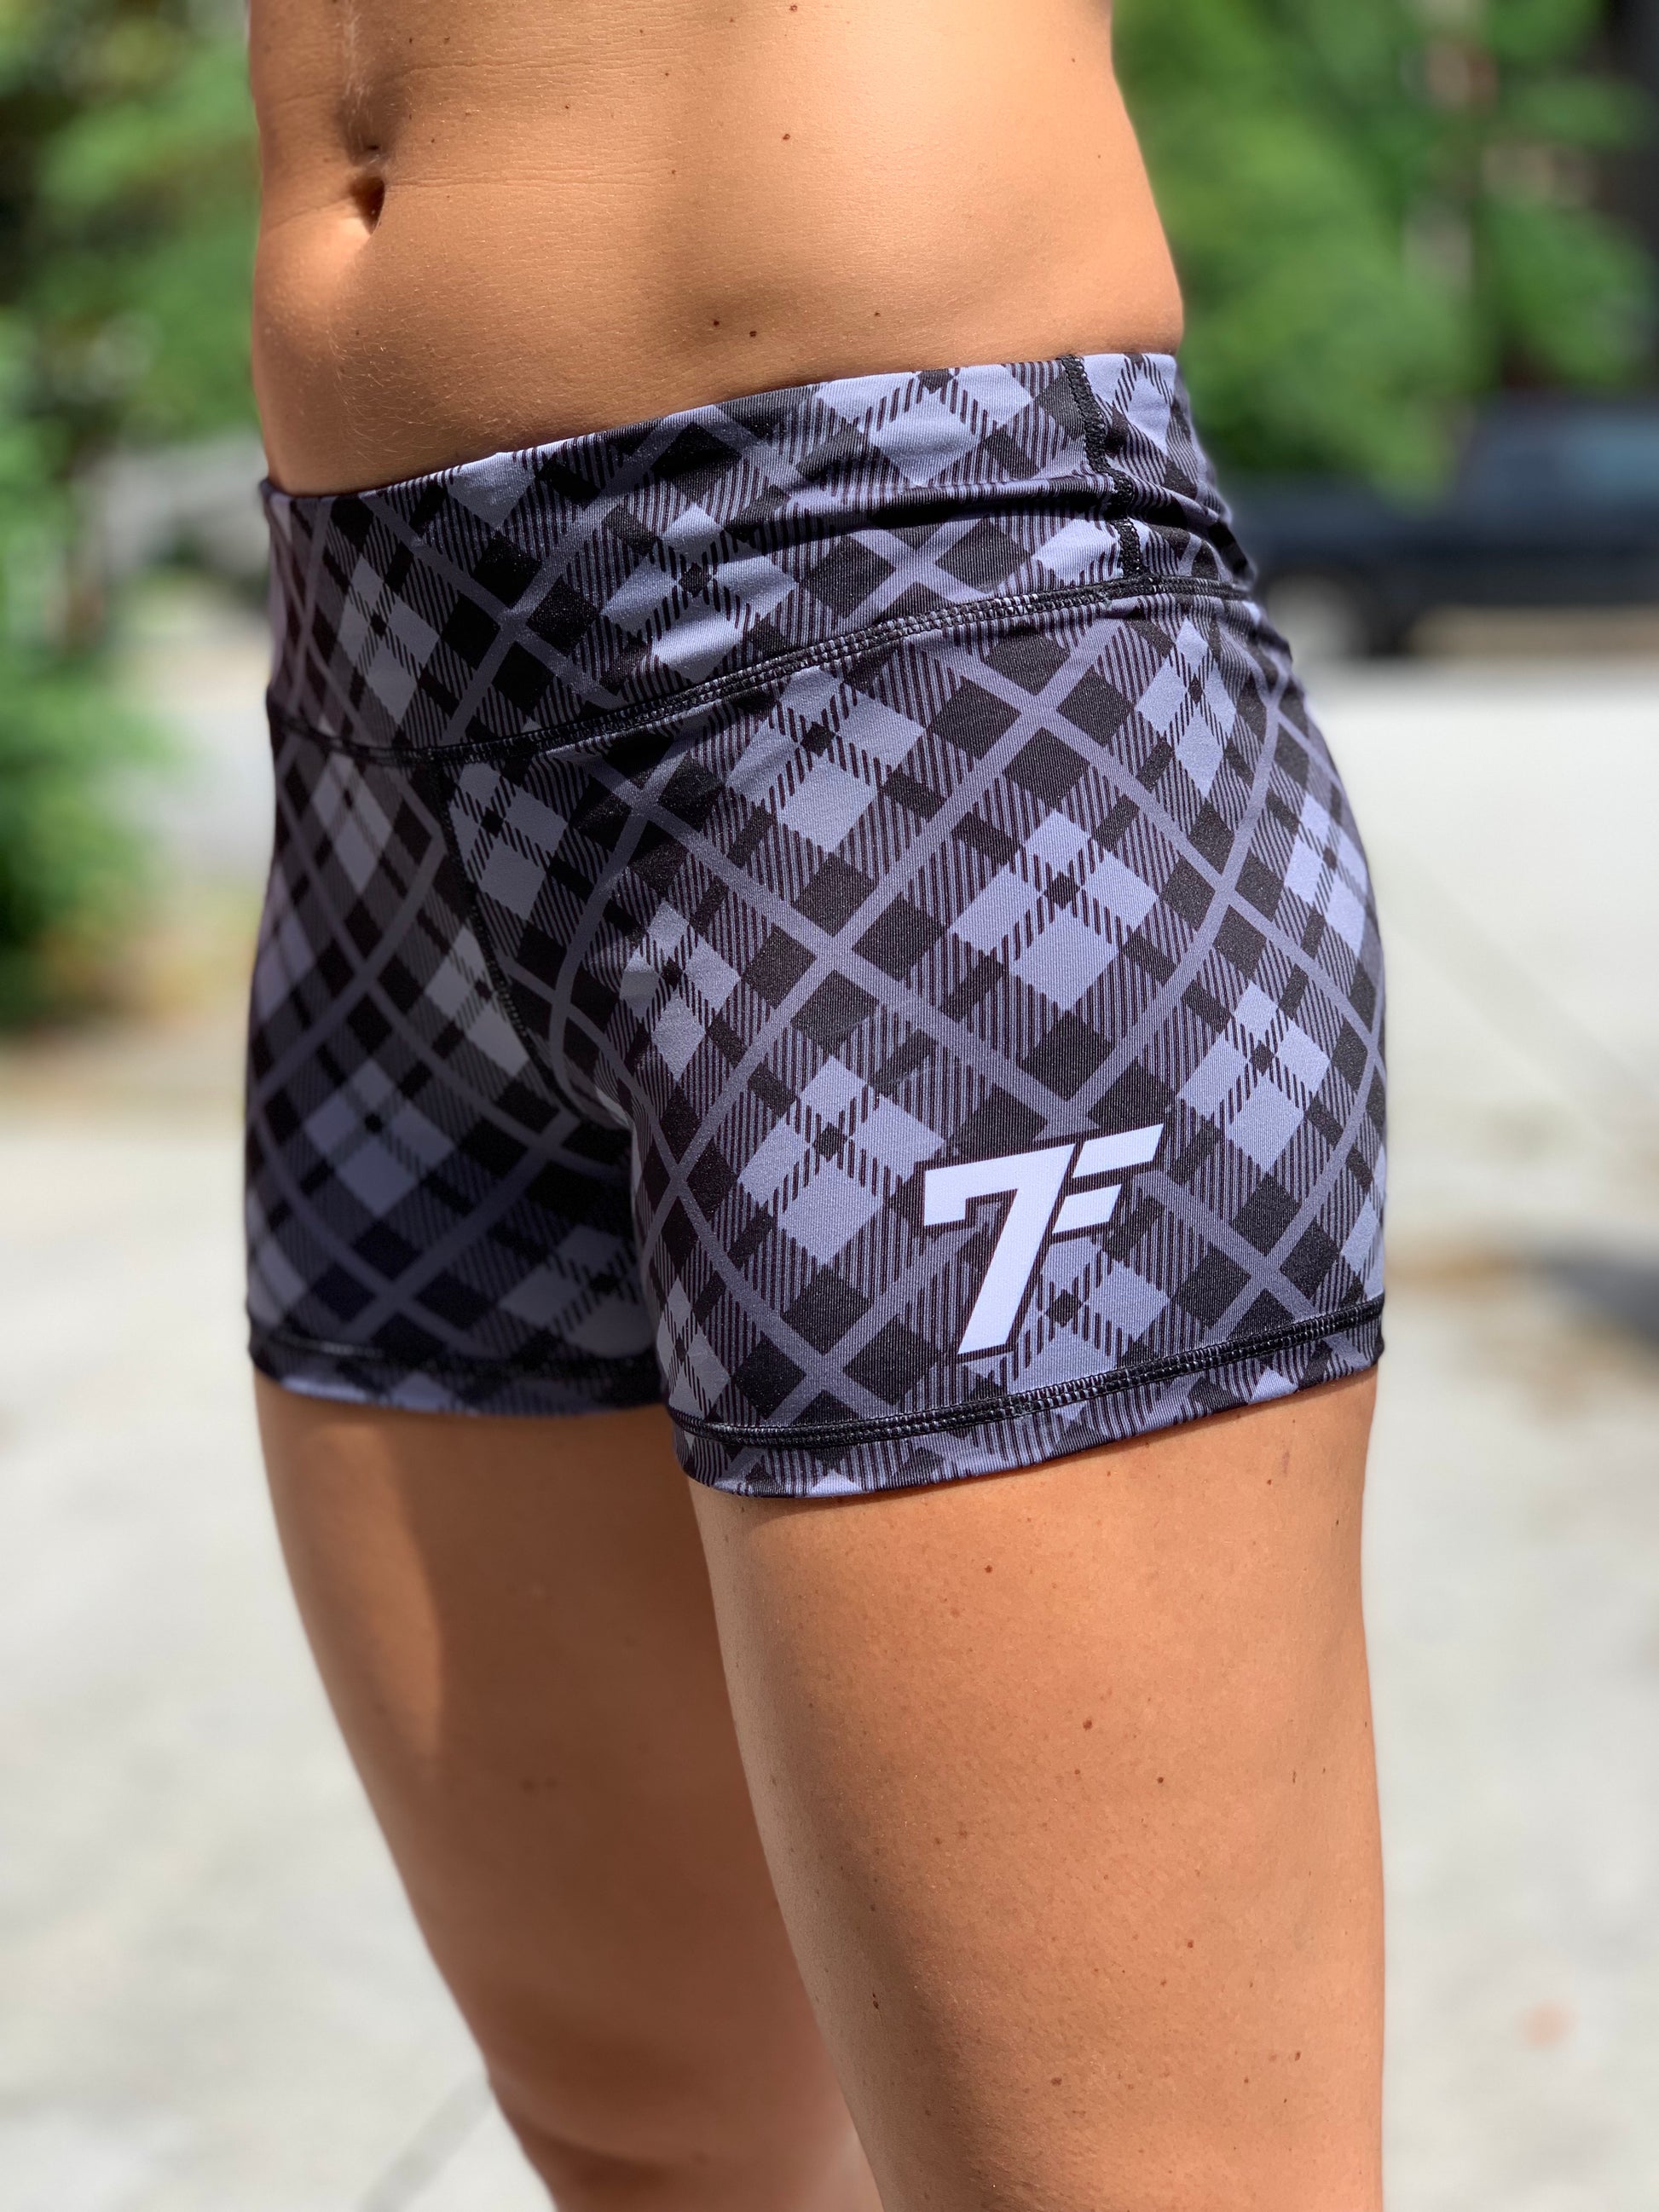 7Five Plaid shorts - Ladies - 7Five Clothing Co.